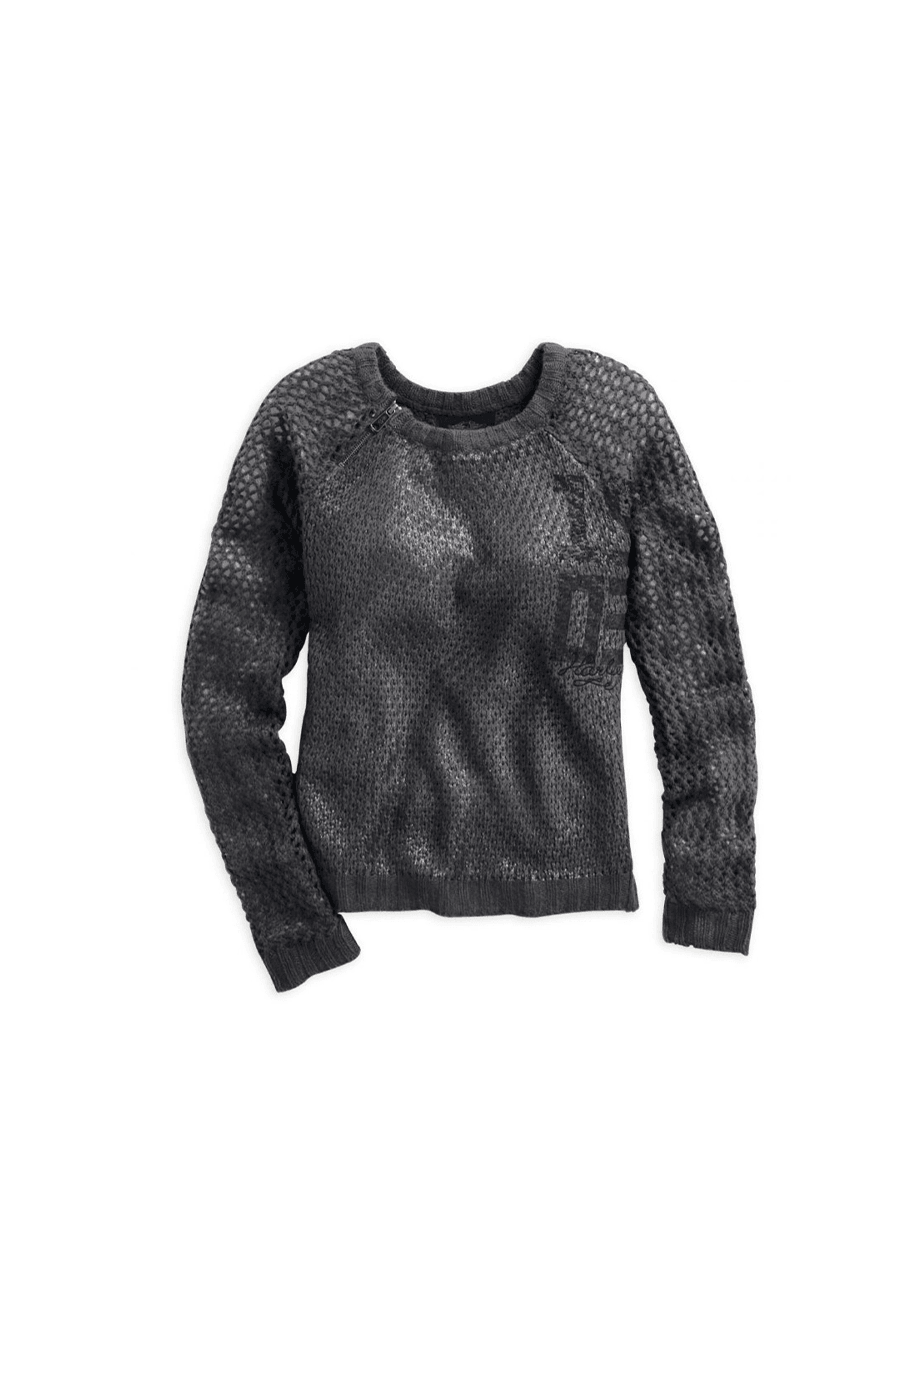 Harley-Davidson® 1903 Foil Printed Sweater